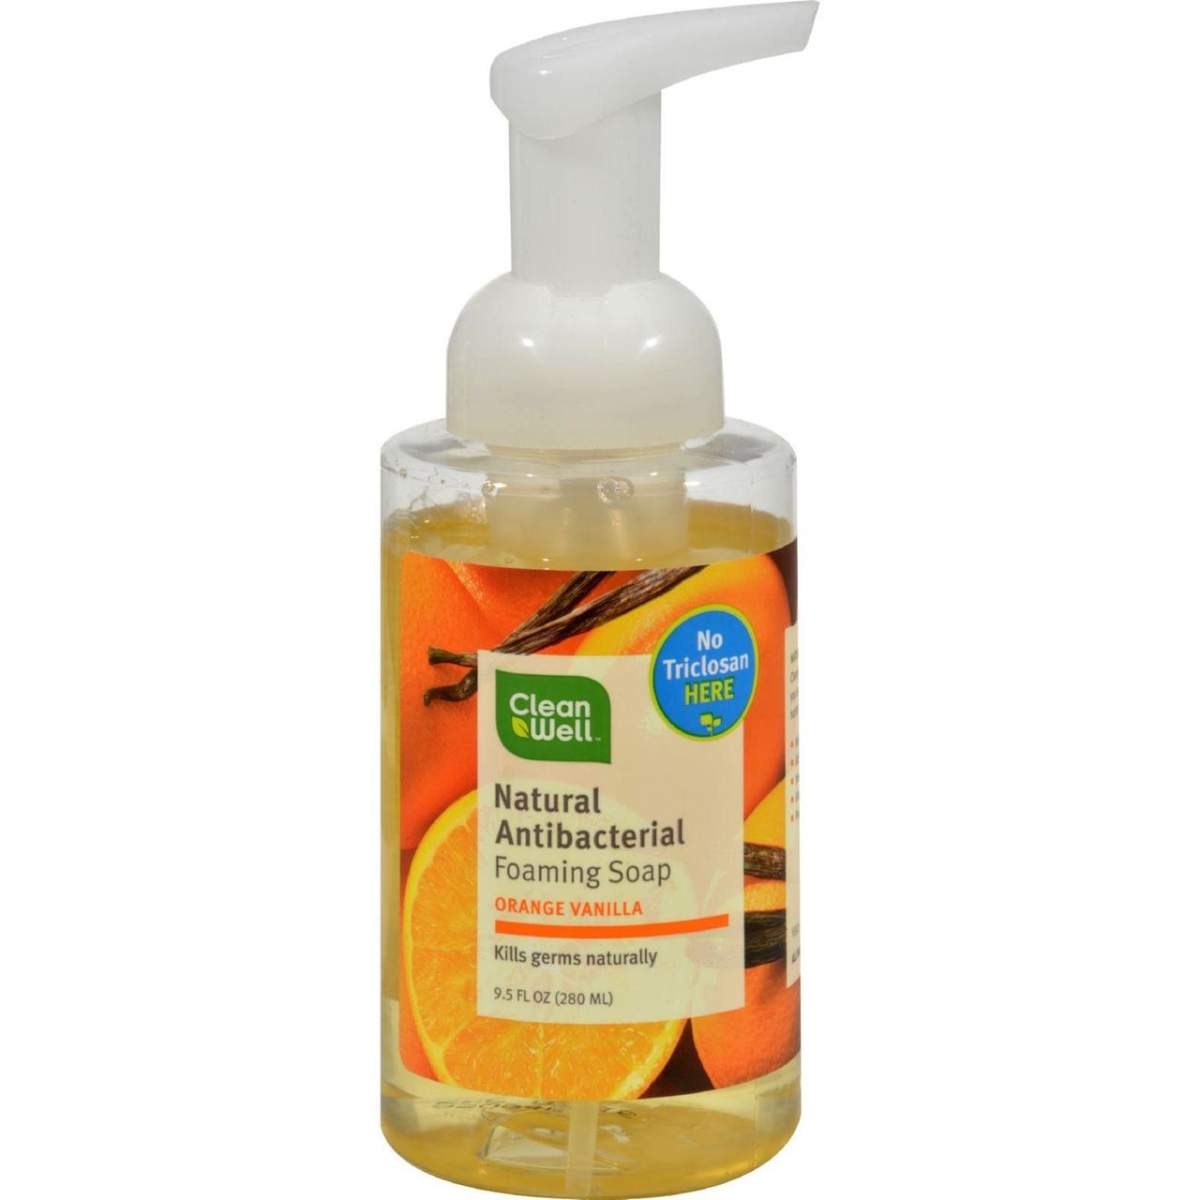 Hg0341503 9.5 Fl Oz All-natural Antibacterial Foaming Hand Wash - Orange Vanilla